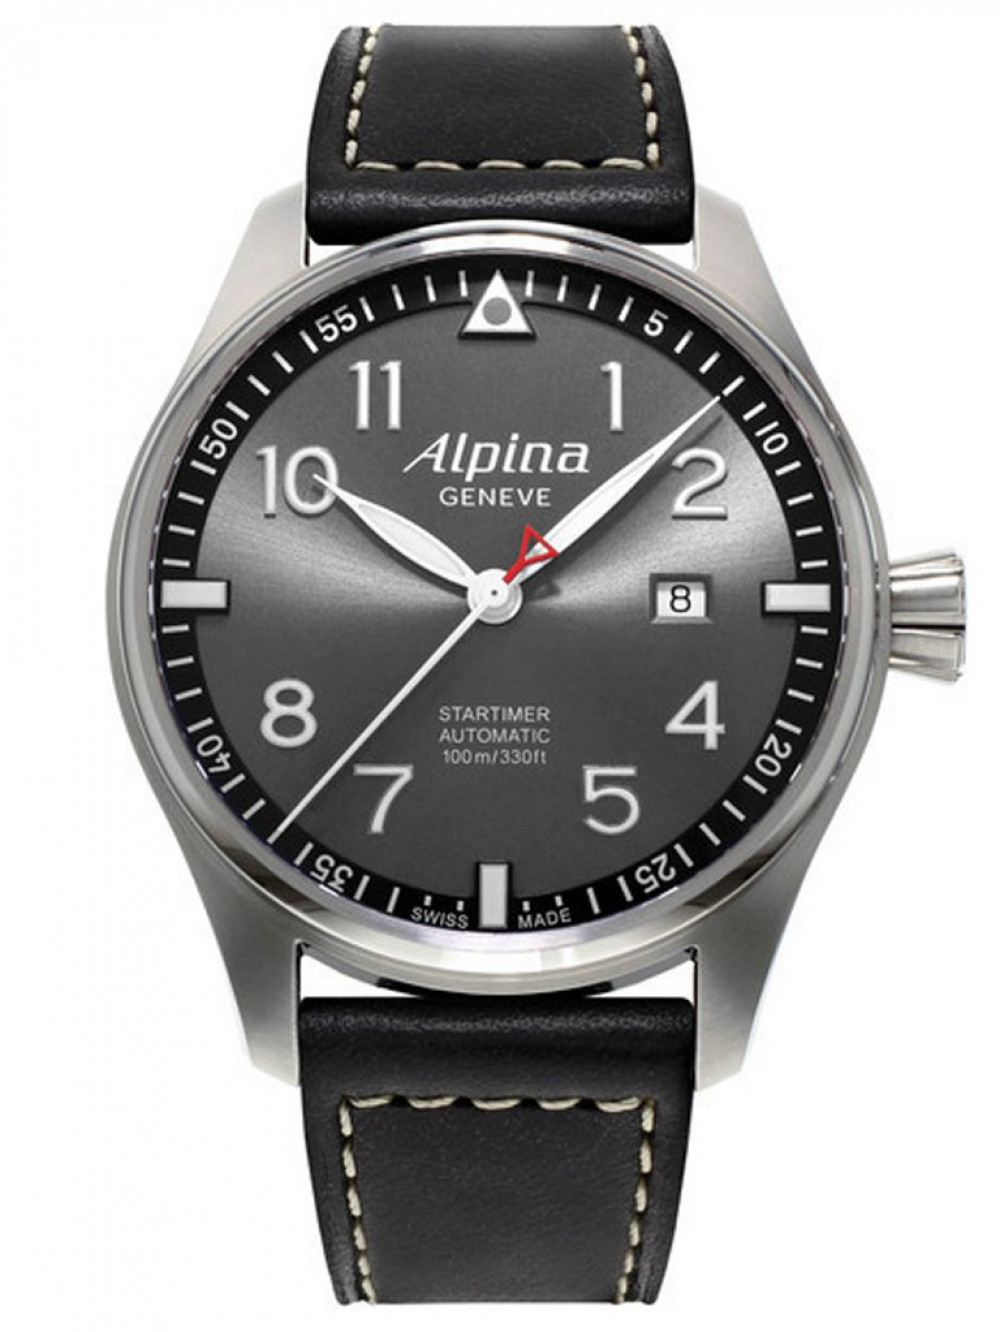 Zegarek firmy Alpina Genève, model Startimer Pilot Automatic